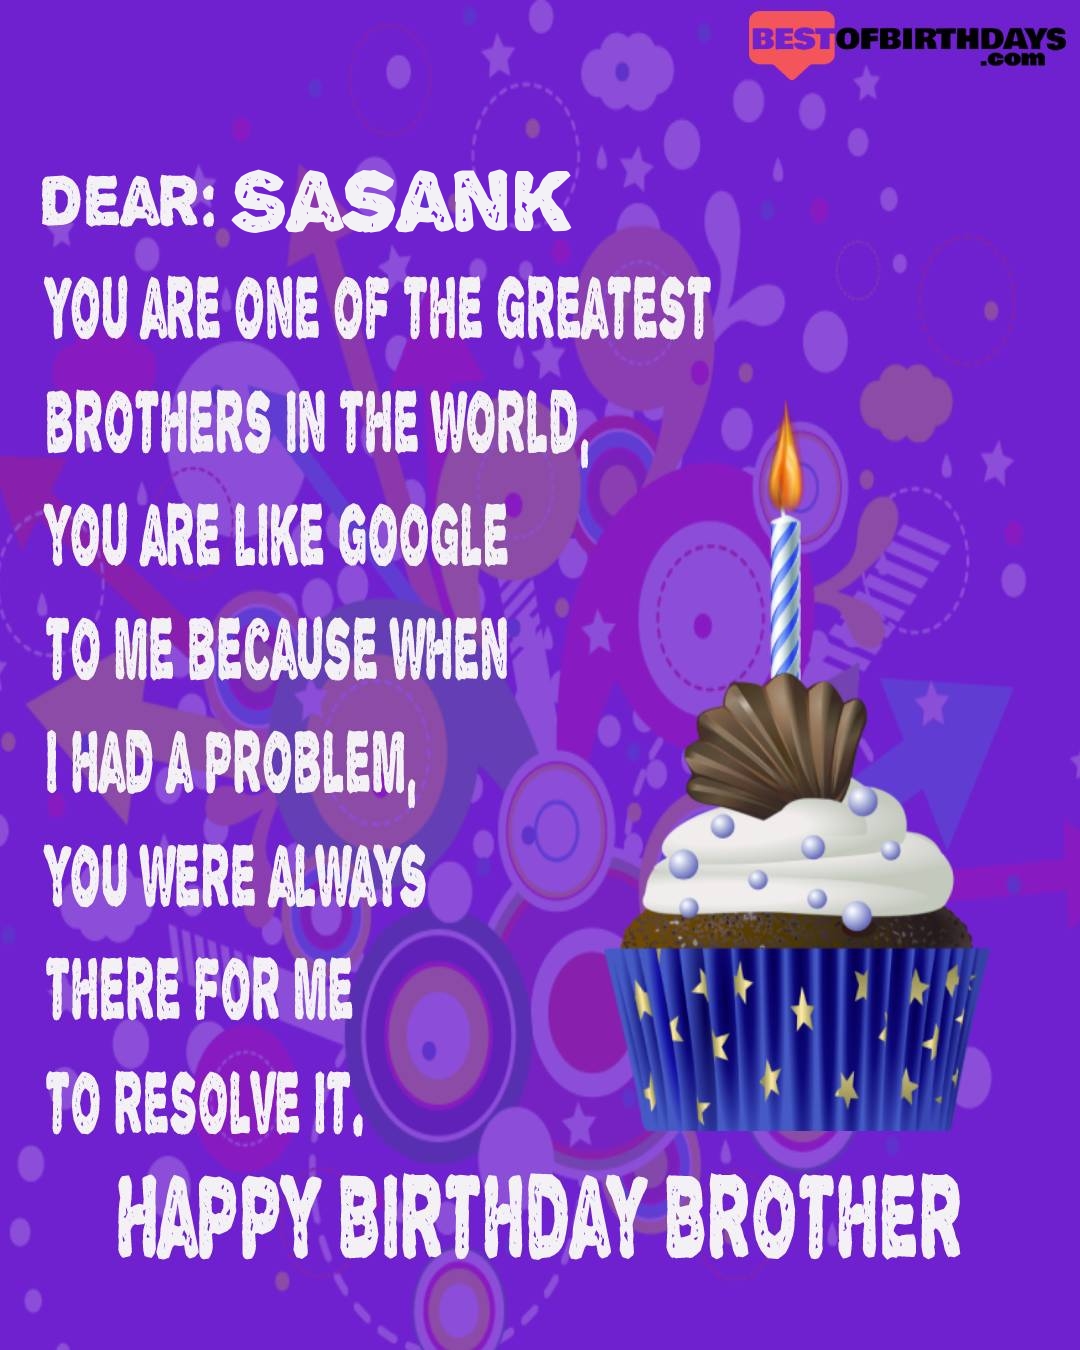 Happy birthday sasank bhai brother bro